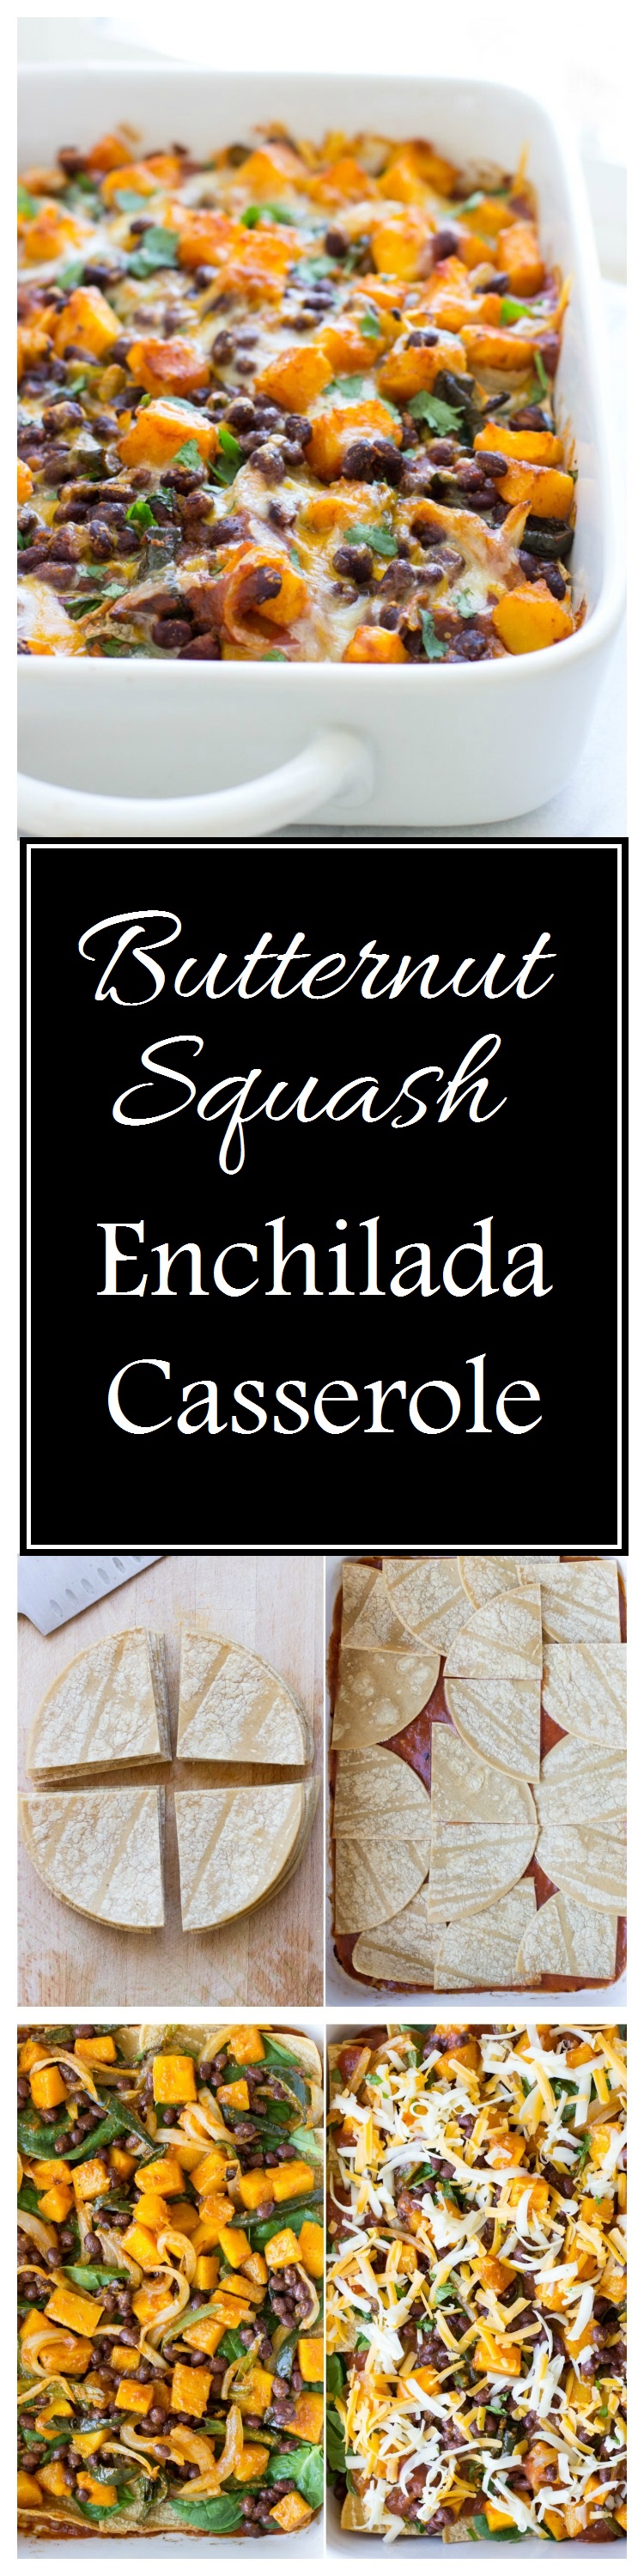 Butternut Squash Enchilada Casserole